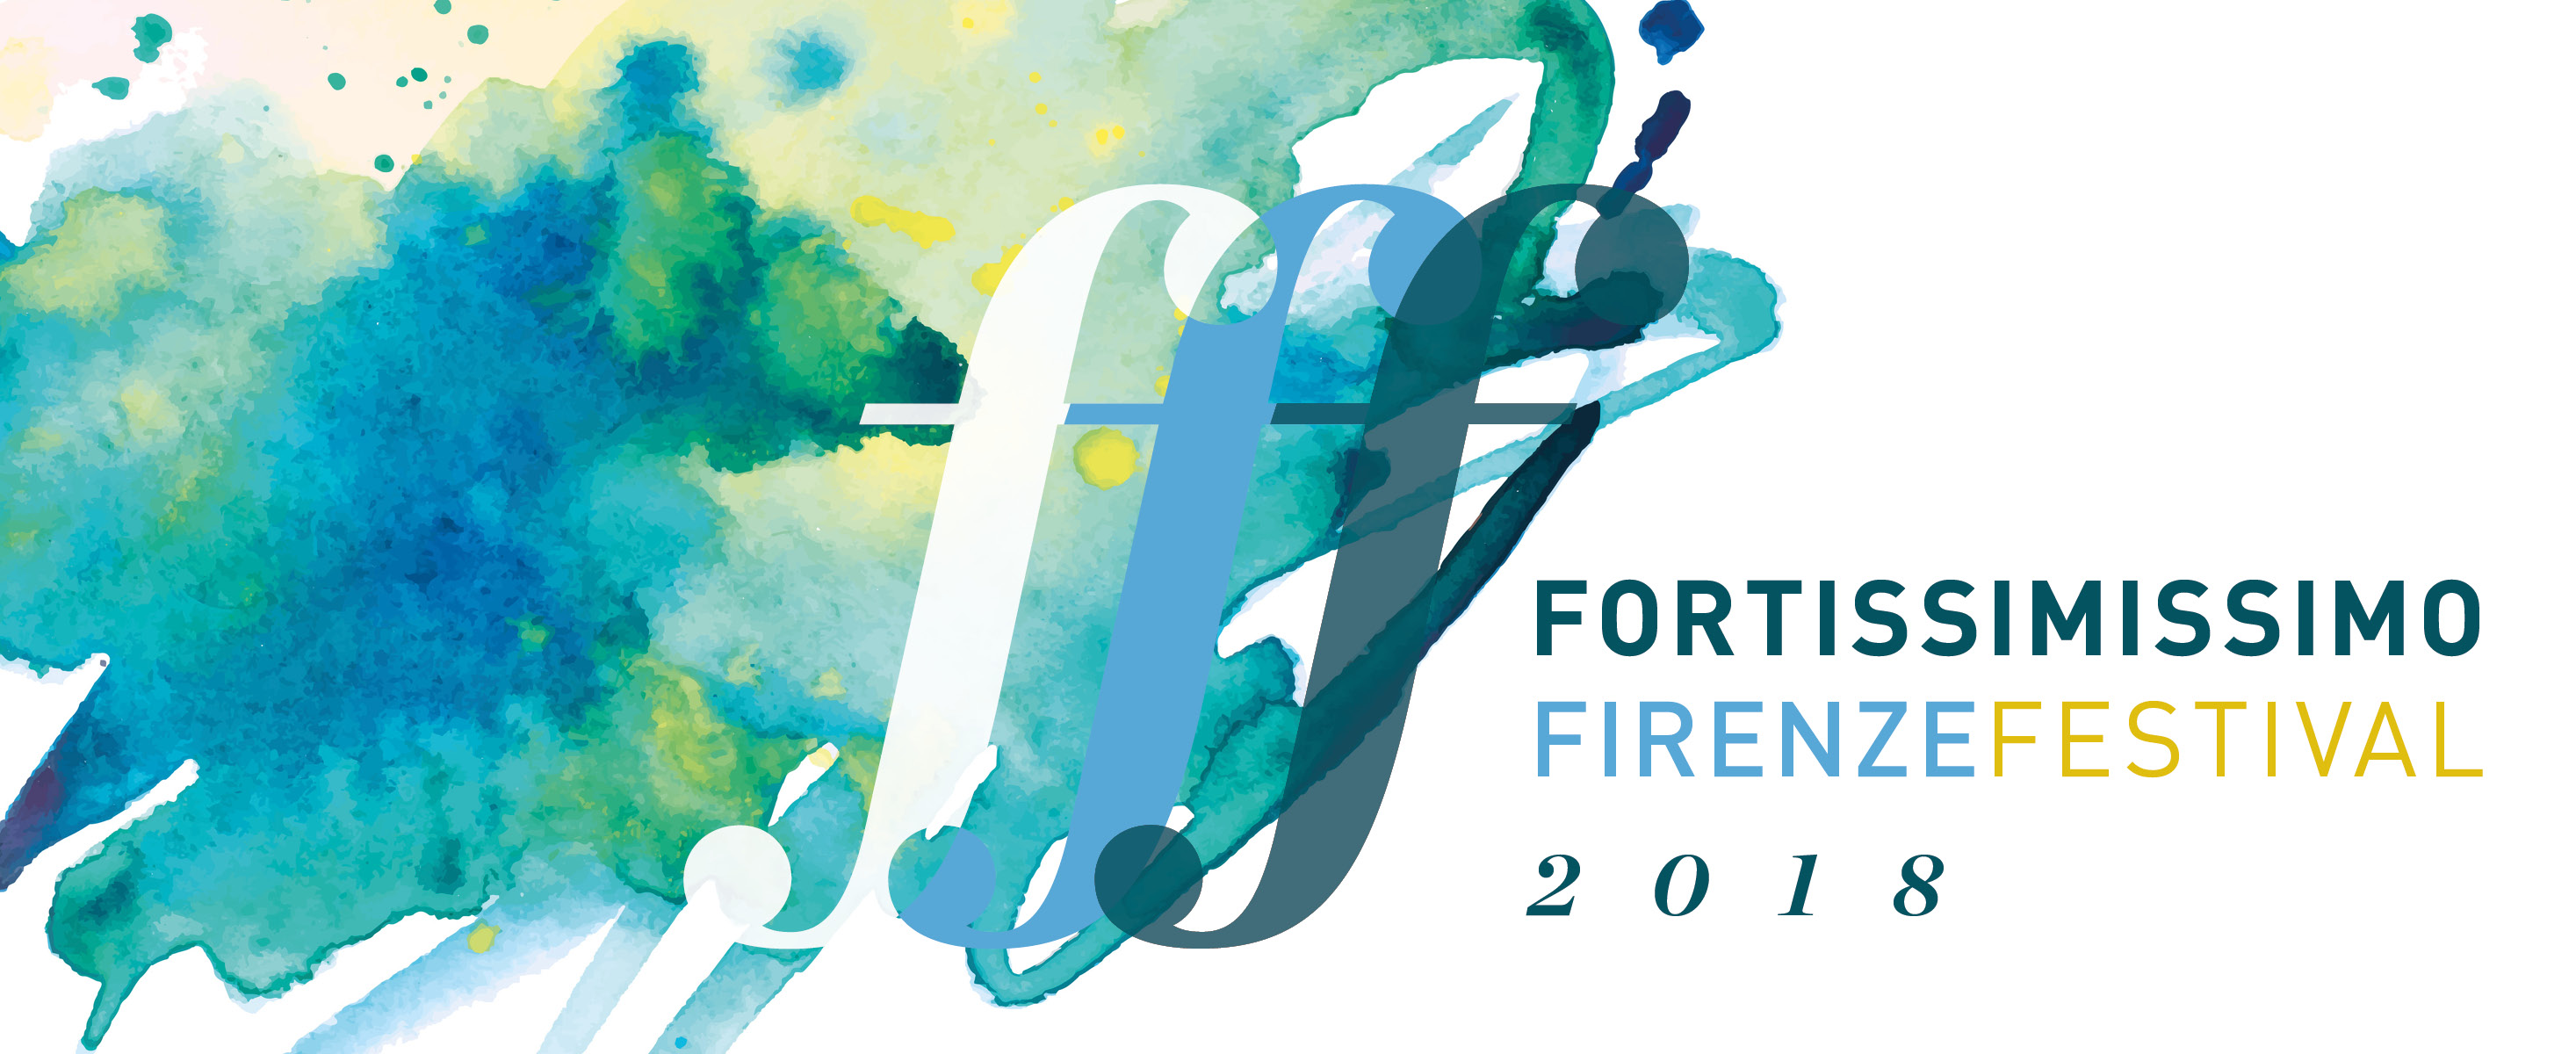 Locandina Fortissimo Firenze Festival